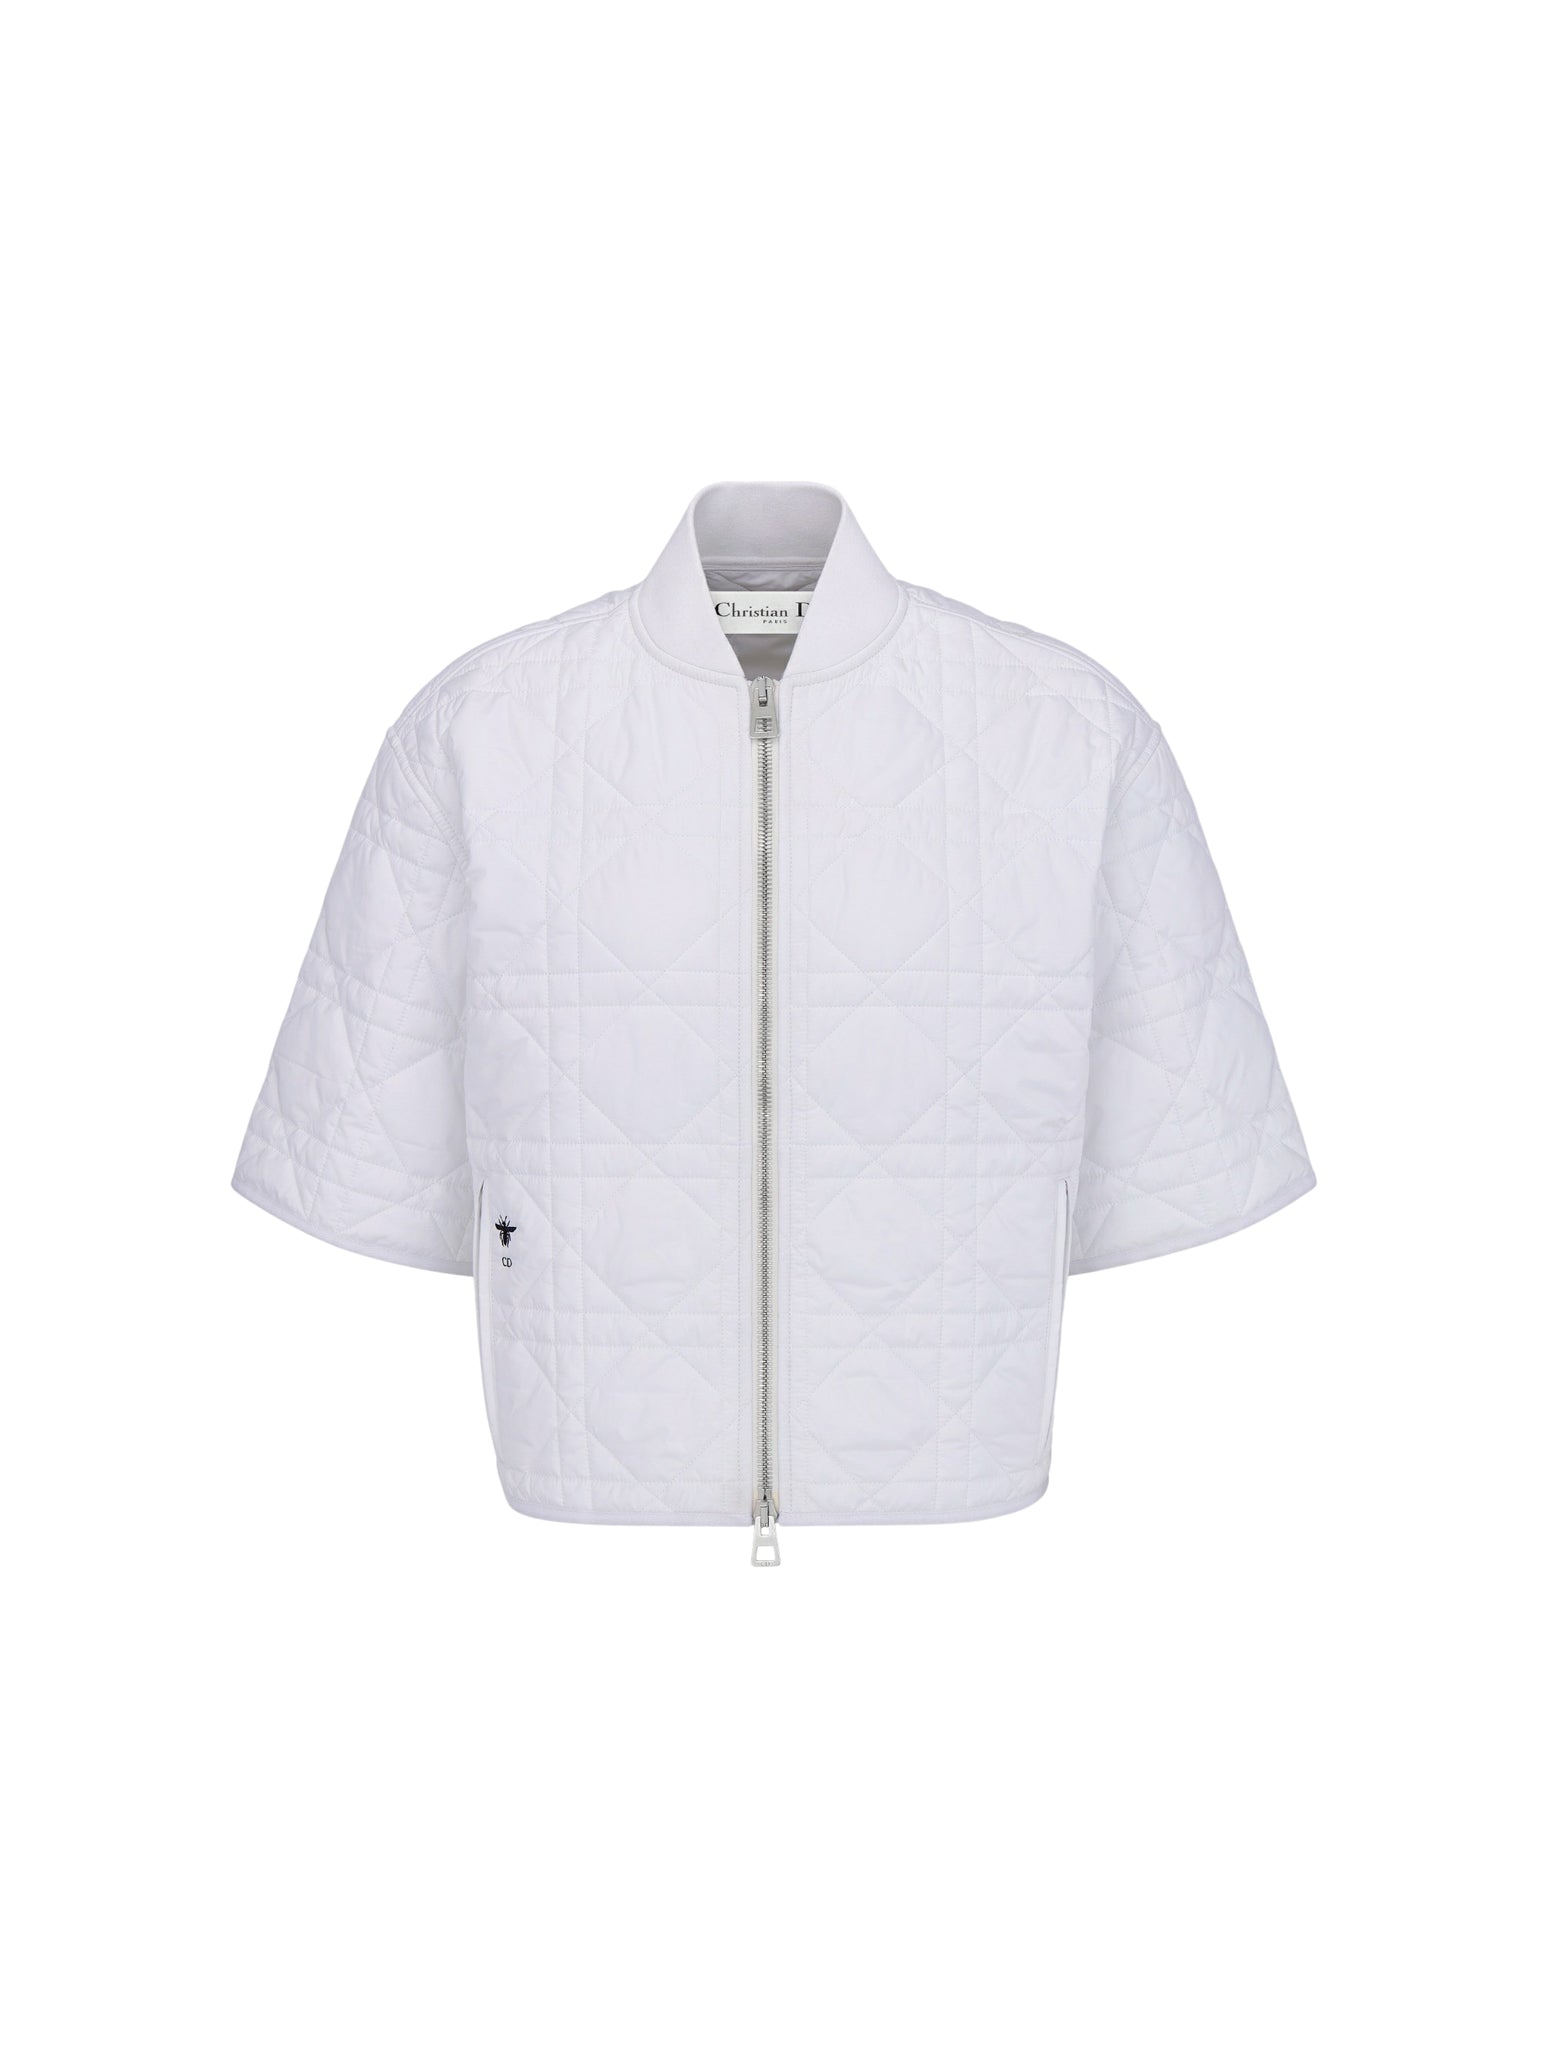 Macrocannage short-sleeved pea coat